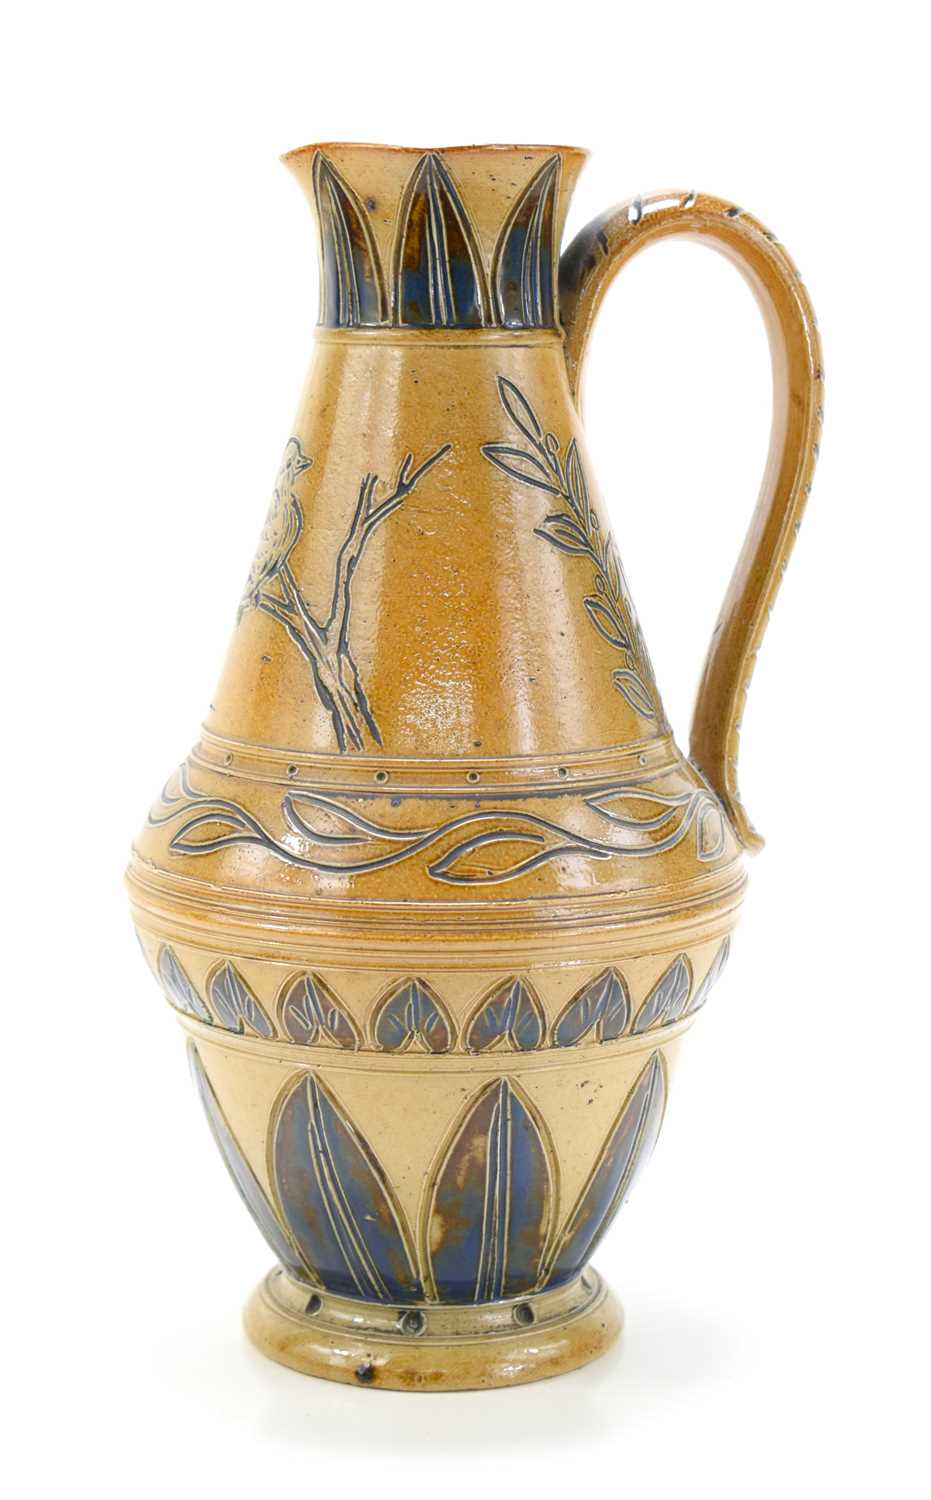 Hannah Barlow for Doulton Lambeth: A salt glazed stoneware jug, the body decorated with a bird